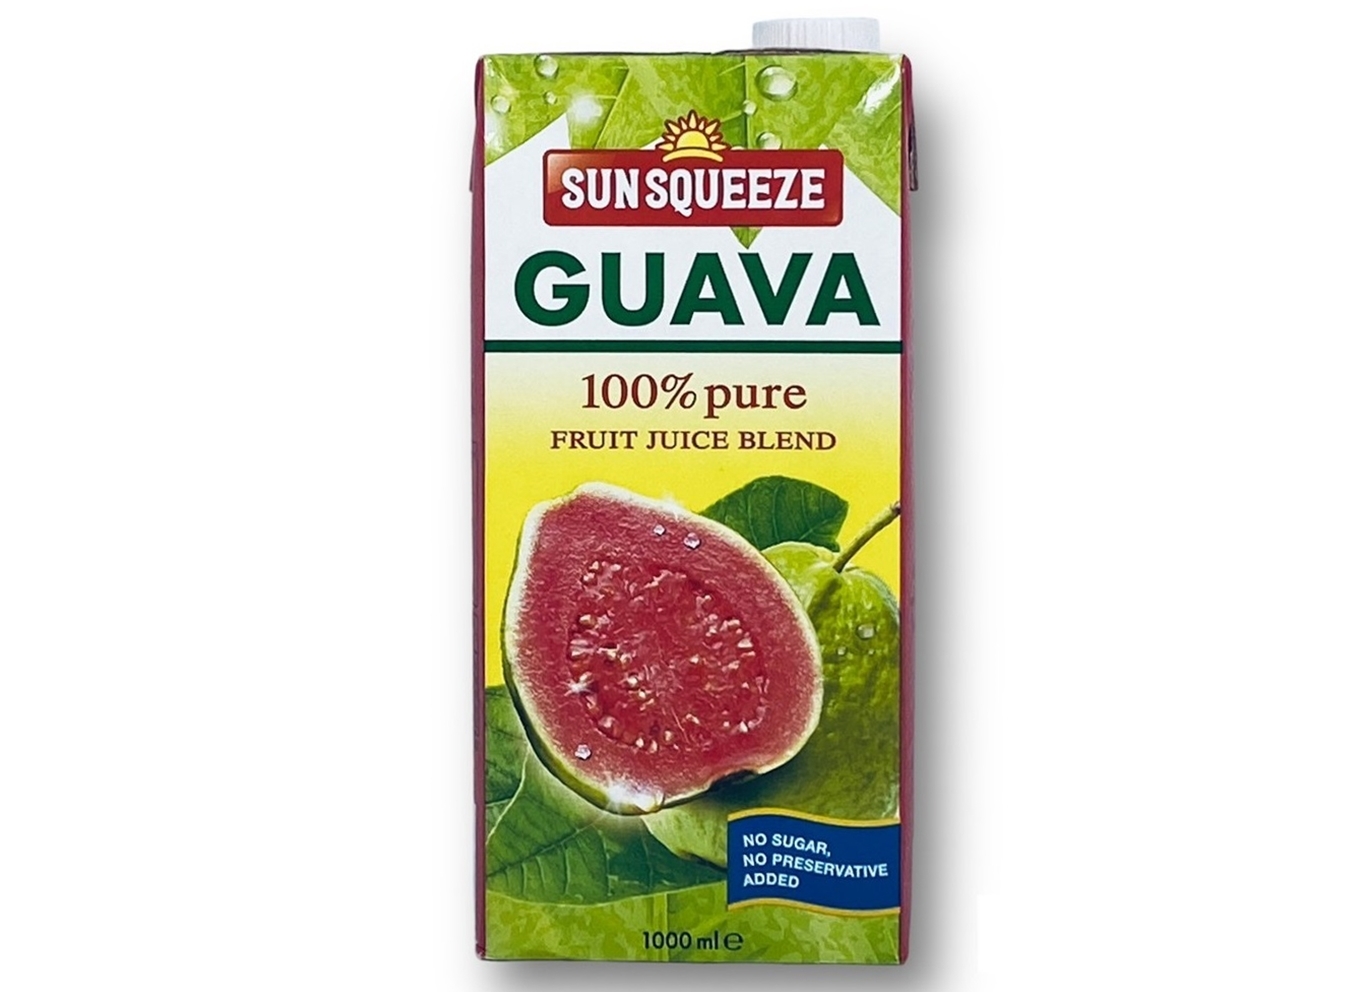 Sun Squeeze Guava 100% Pure Fruits Juice Blend.